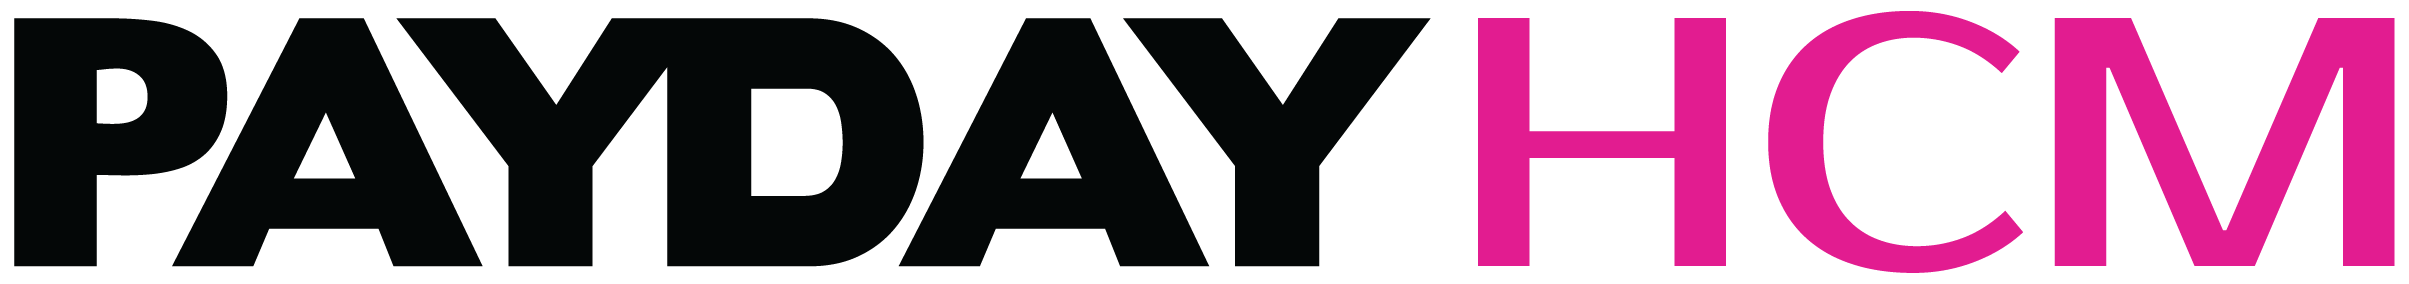 Payday HCM logo